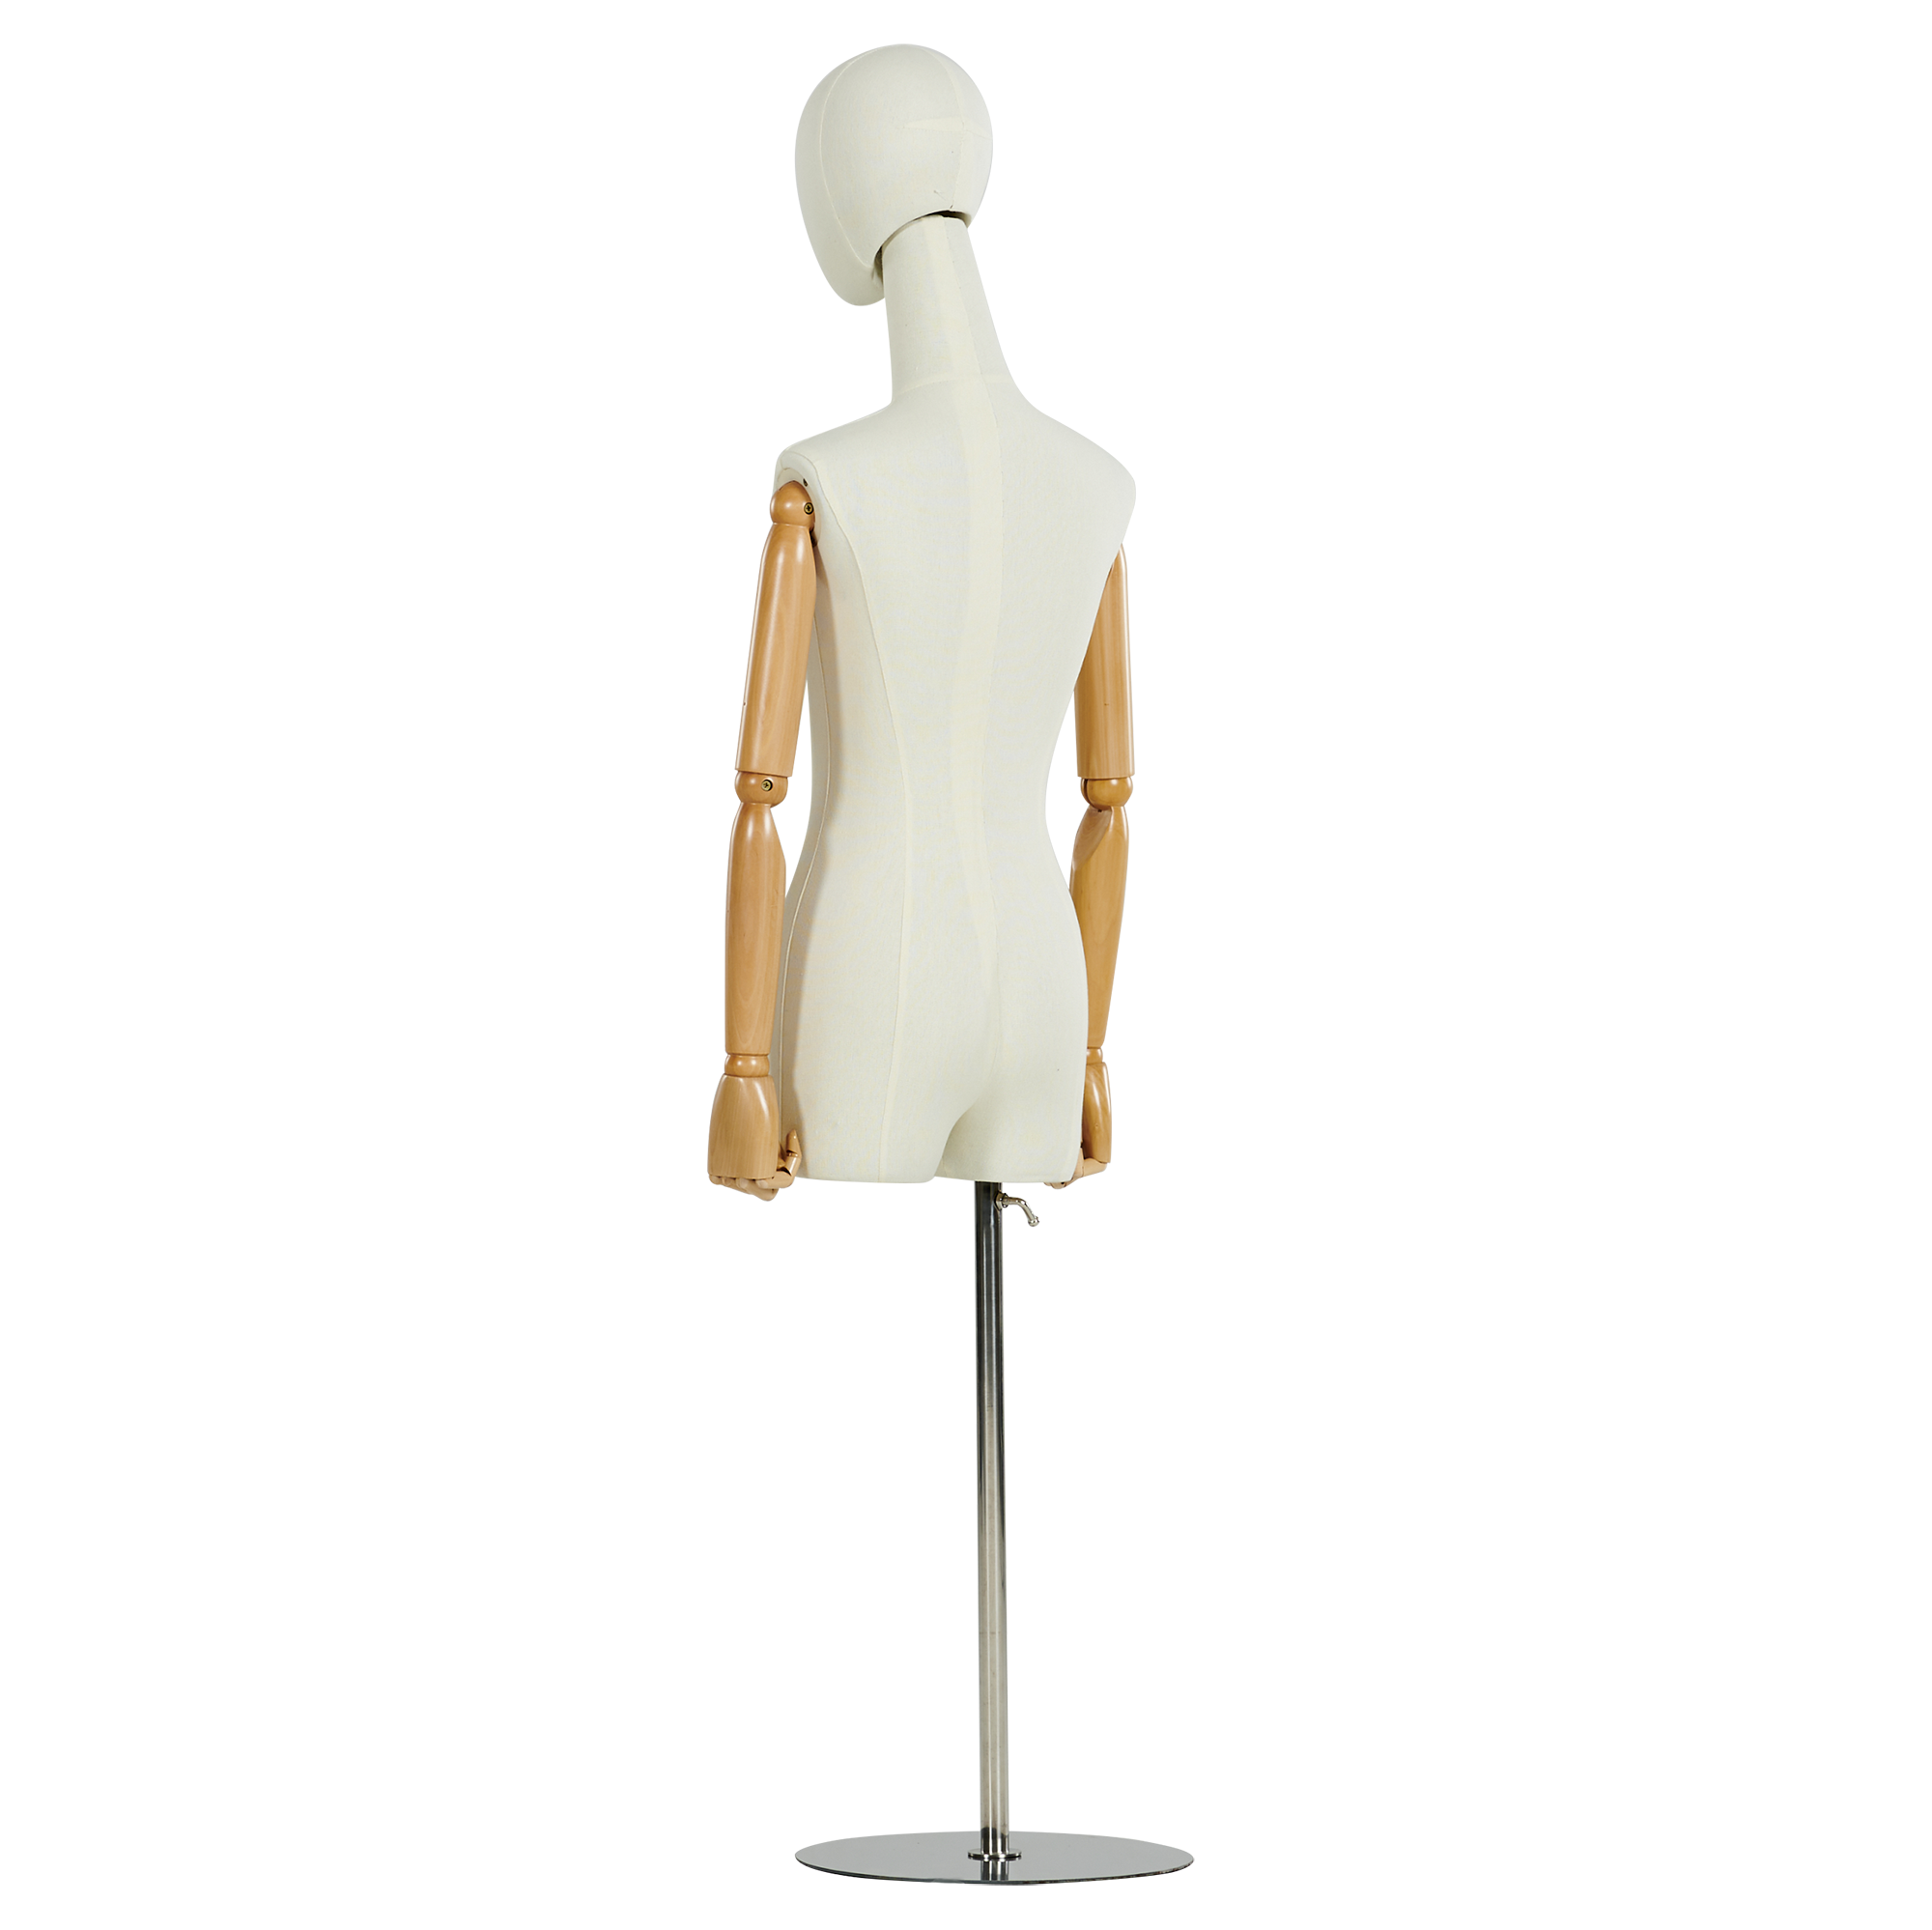 Half Body Torso Standing Woman Mannequins dress form